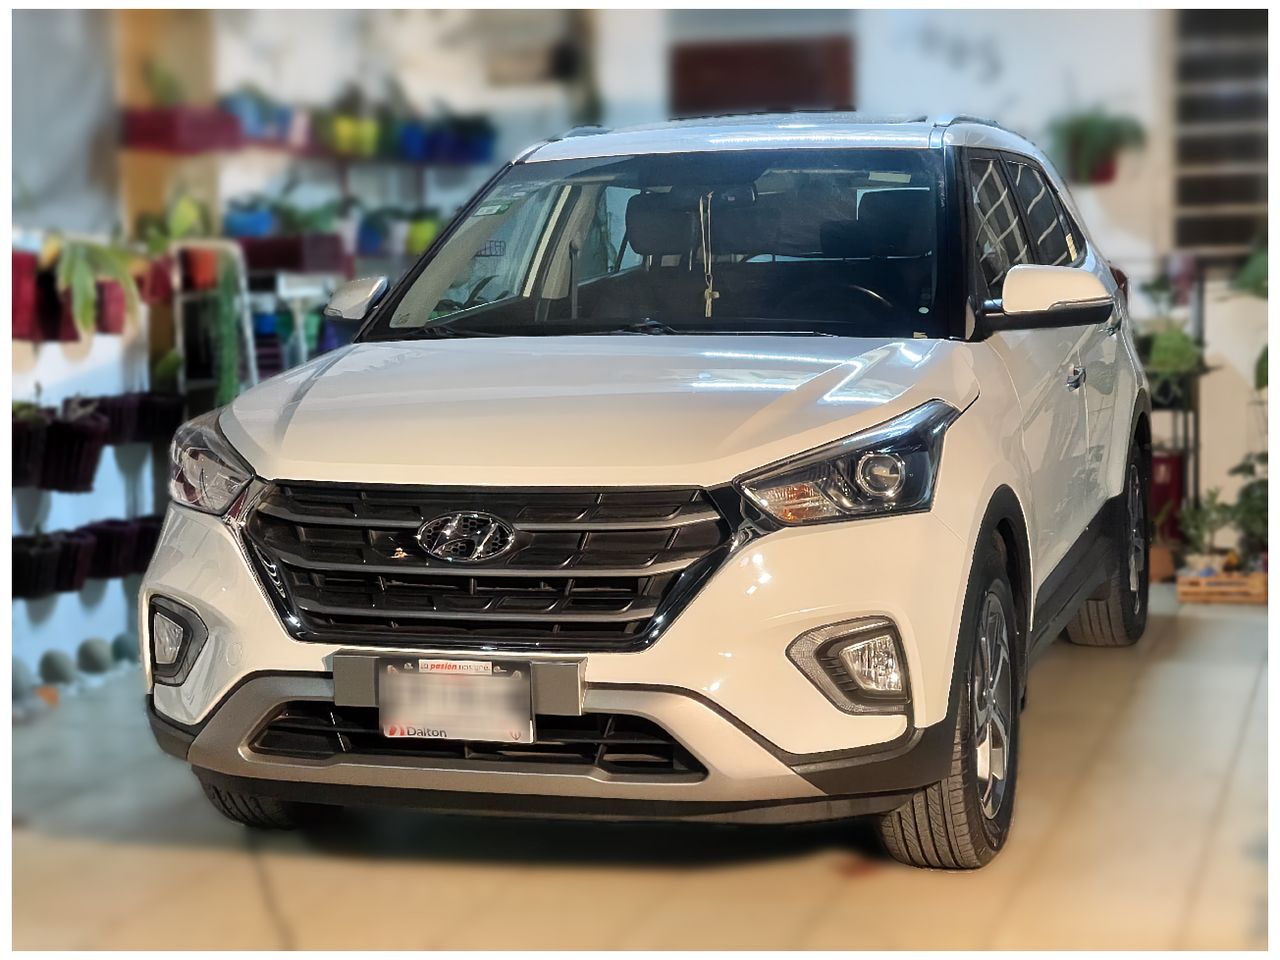 Autos seminuevos - Hyundai Creta 2019